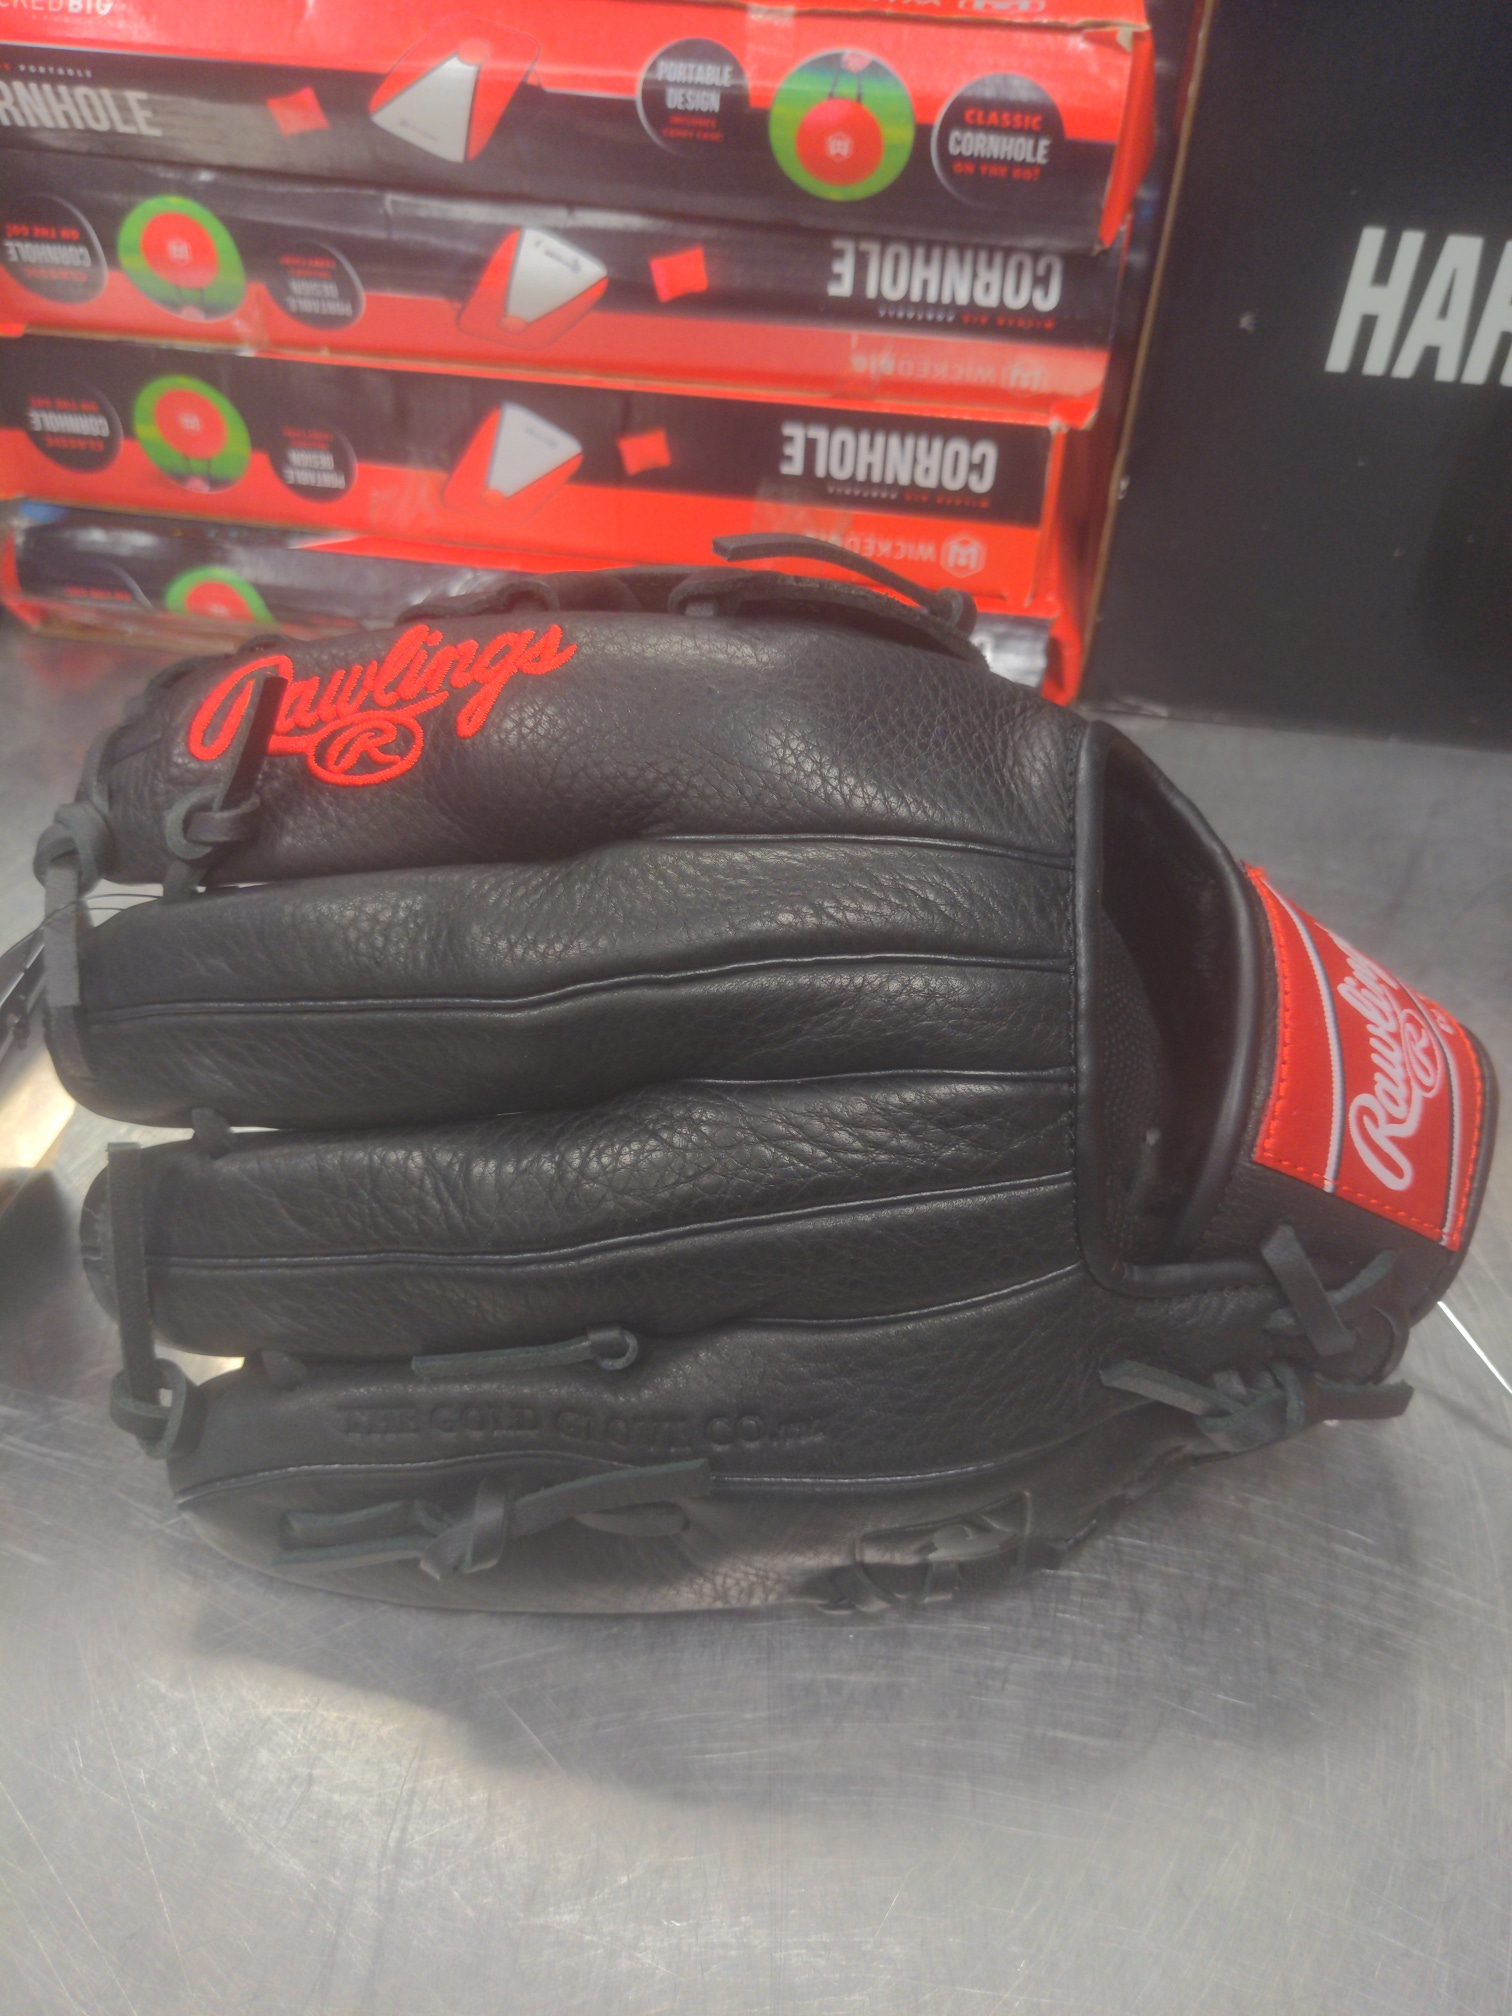 New Rawlings Right Hand Throw Baseball Glove 11"